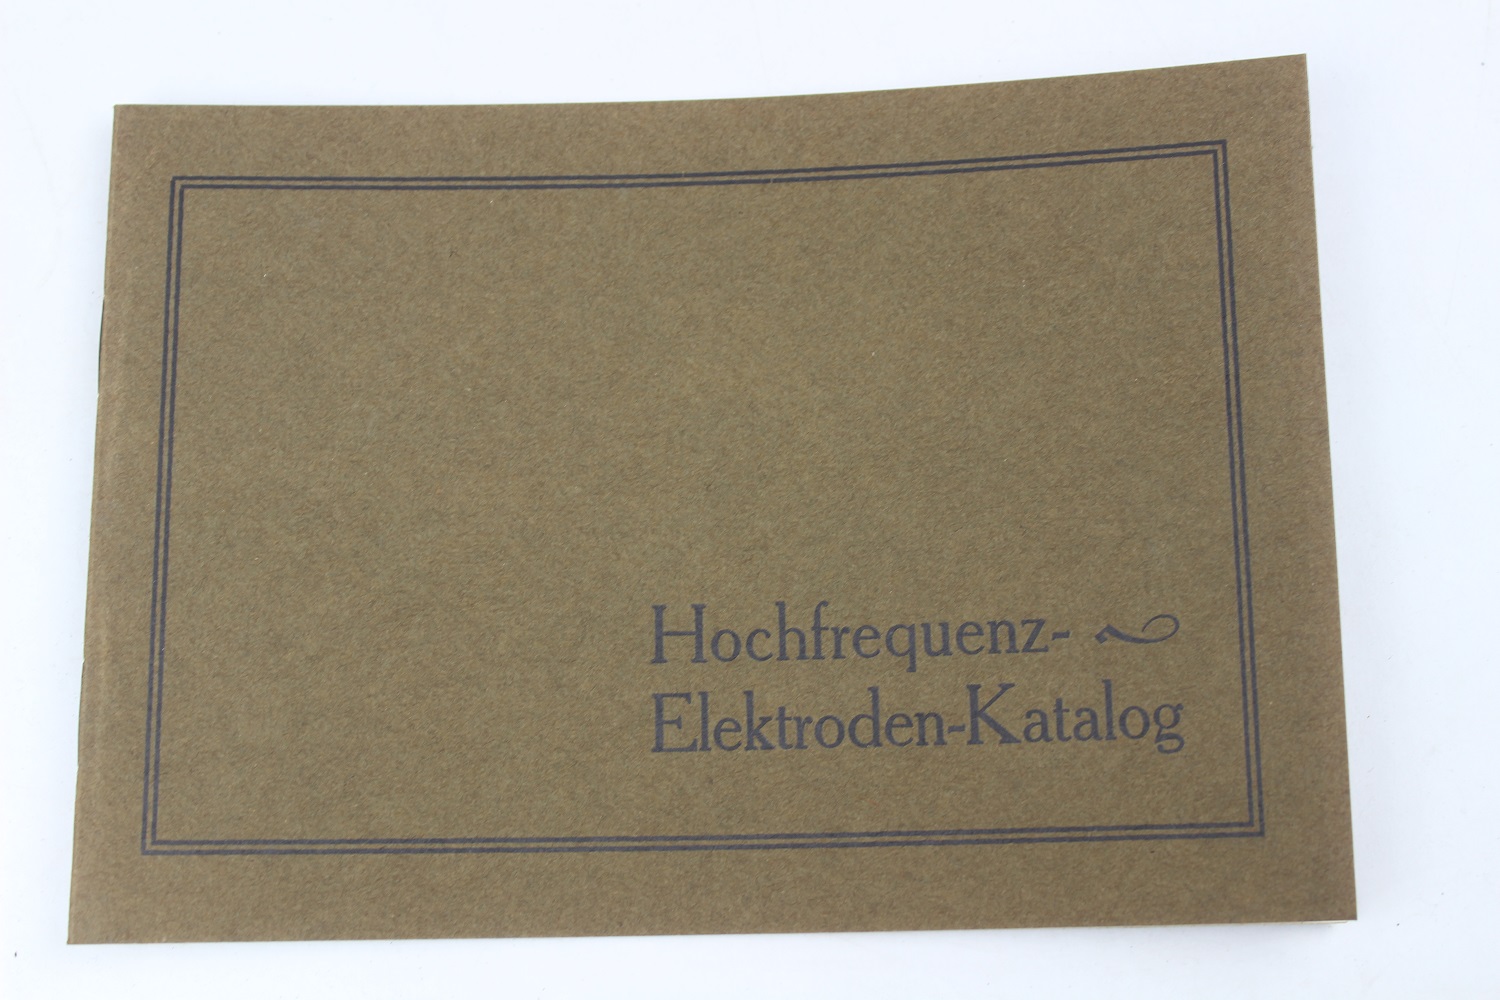 Archivalie Hochfrequenz-Elektroden-Katalog (Museum Baruther Glashütte CC BY-NC-SA)